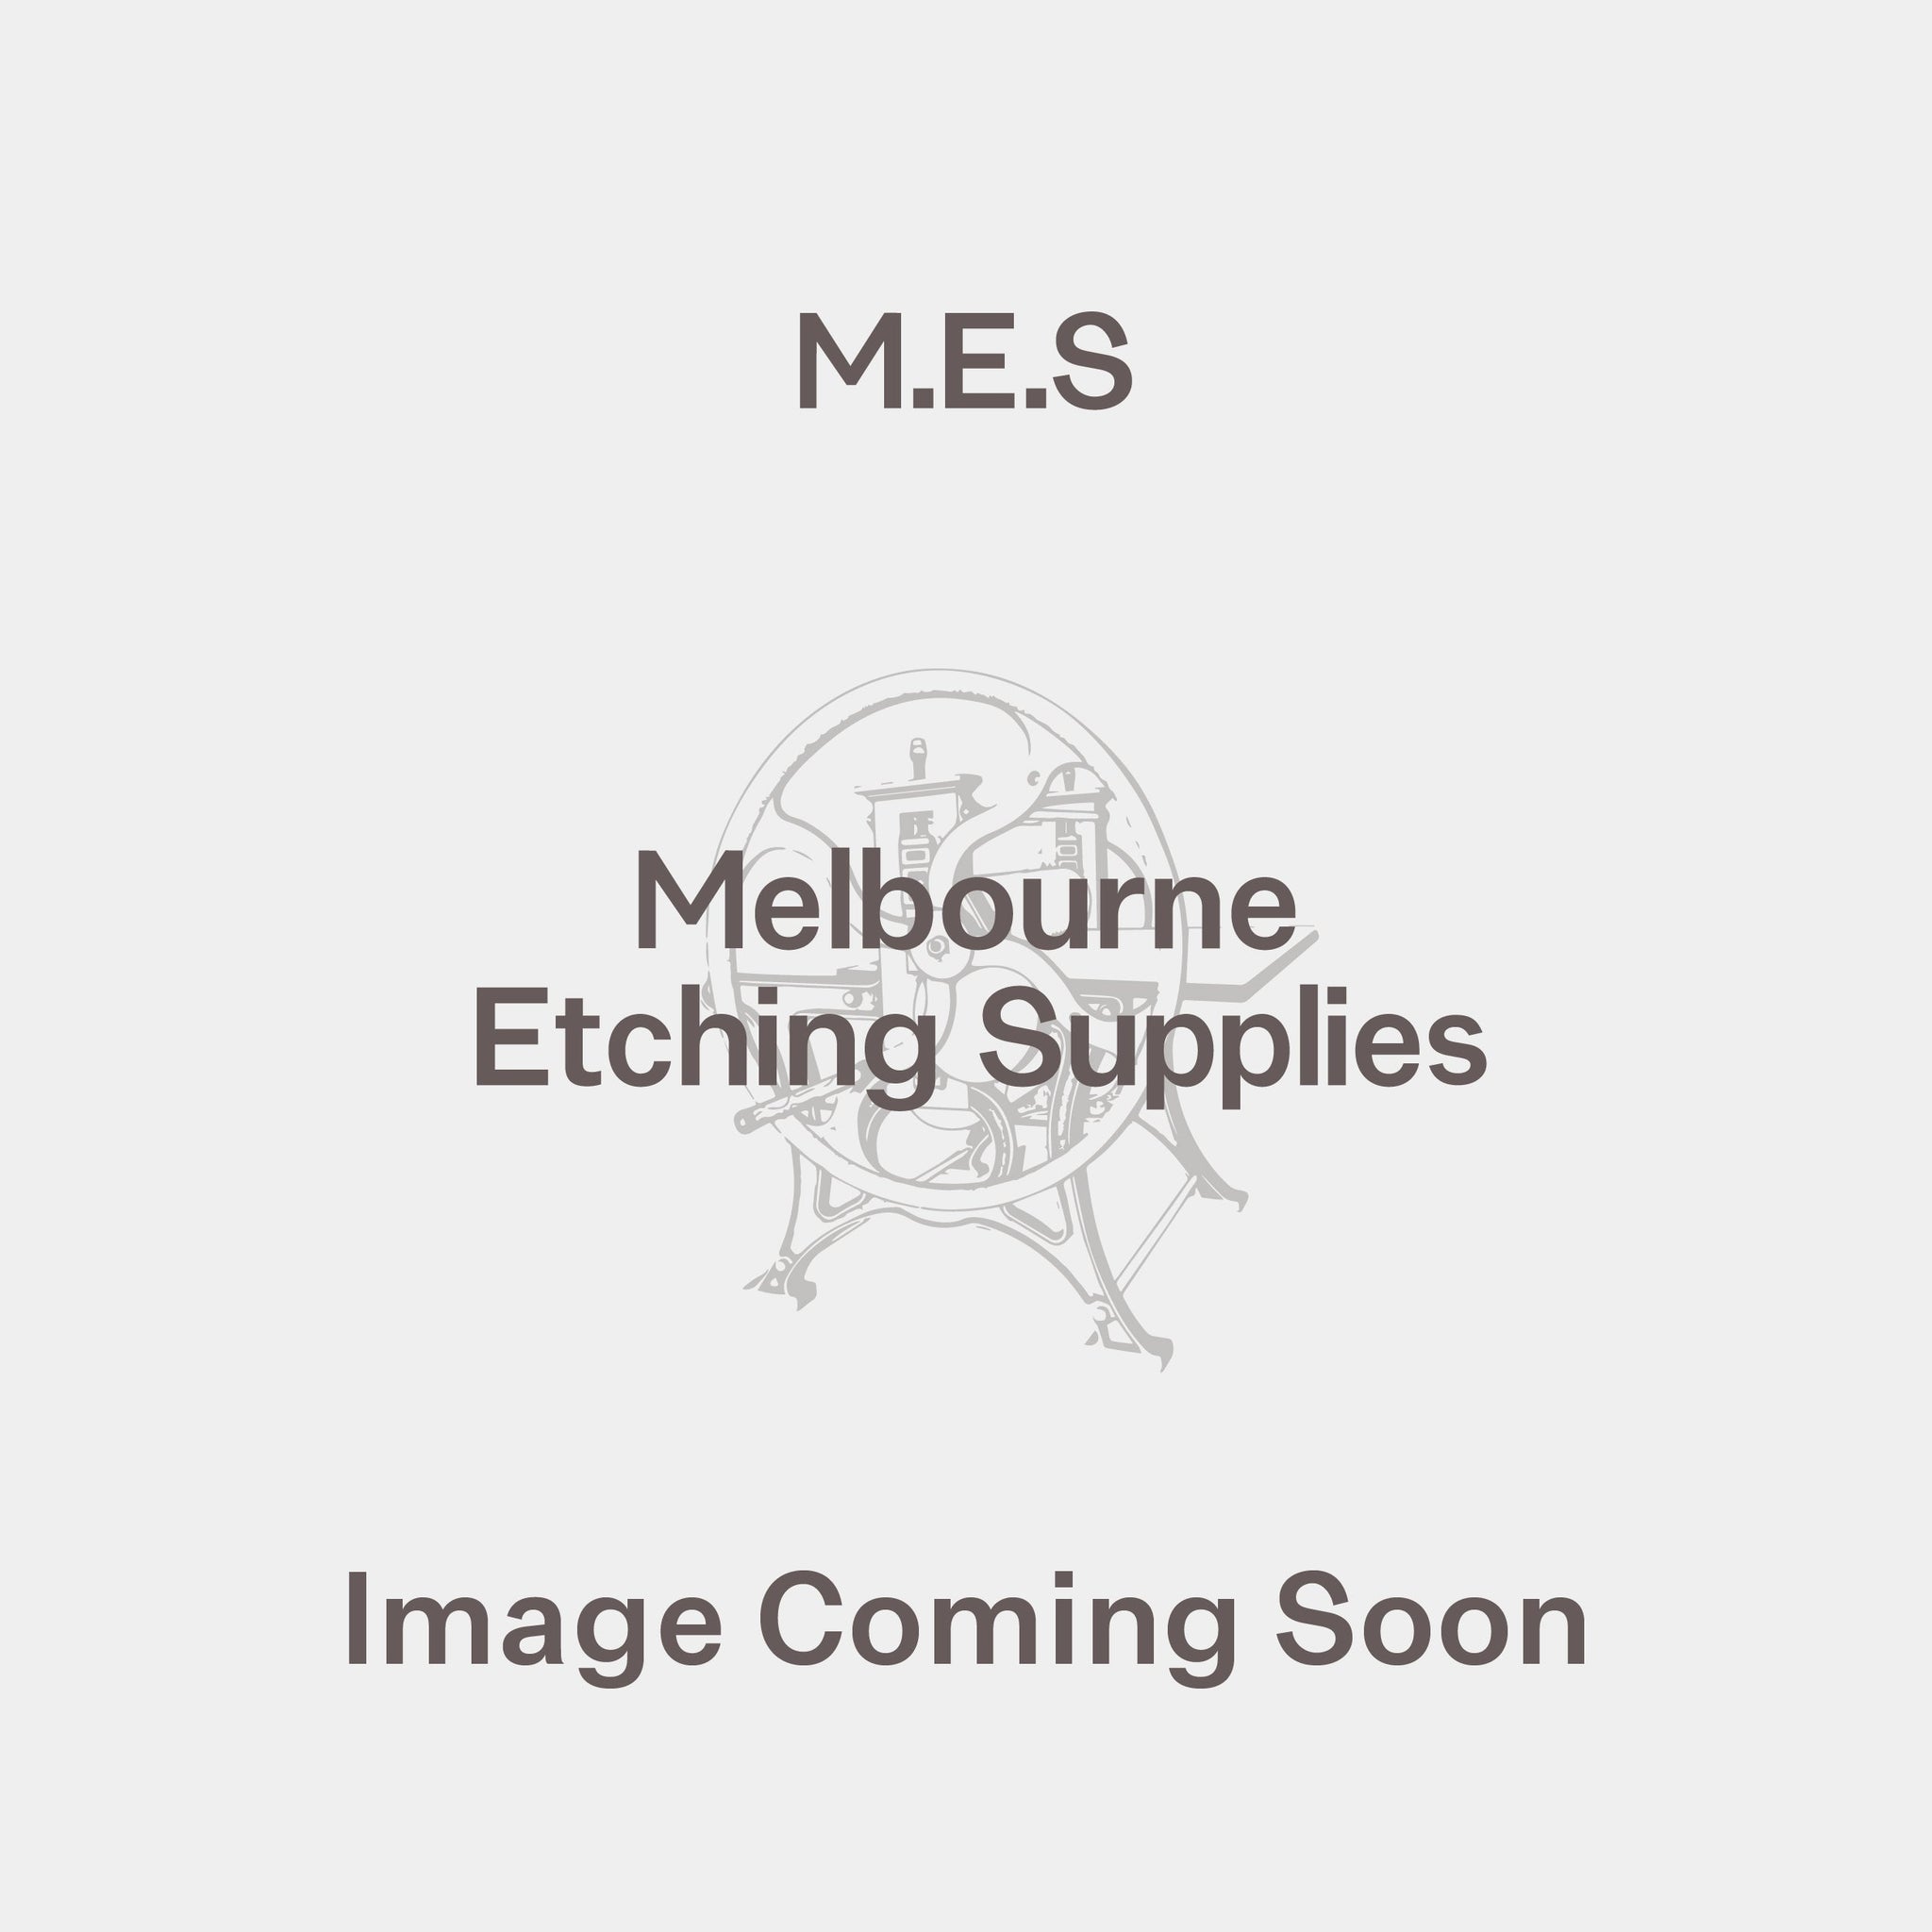 Hahnemuhle Travel Journal Landscape 9x14cm - Melbourne Etching Supplies